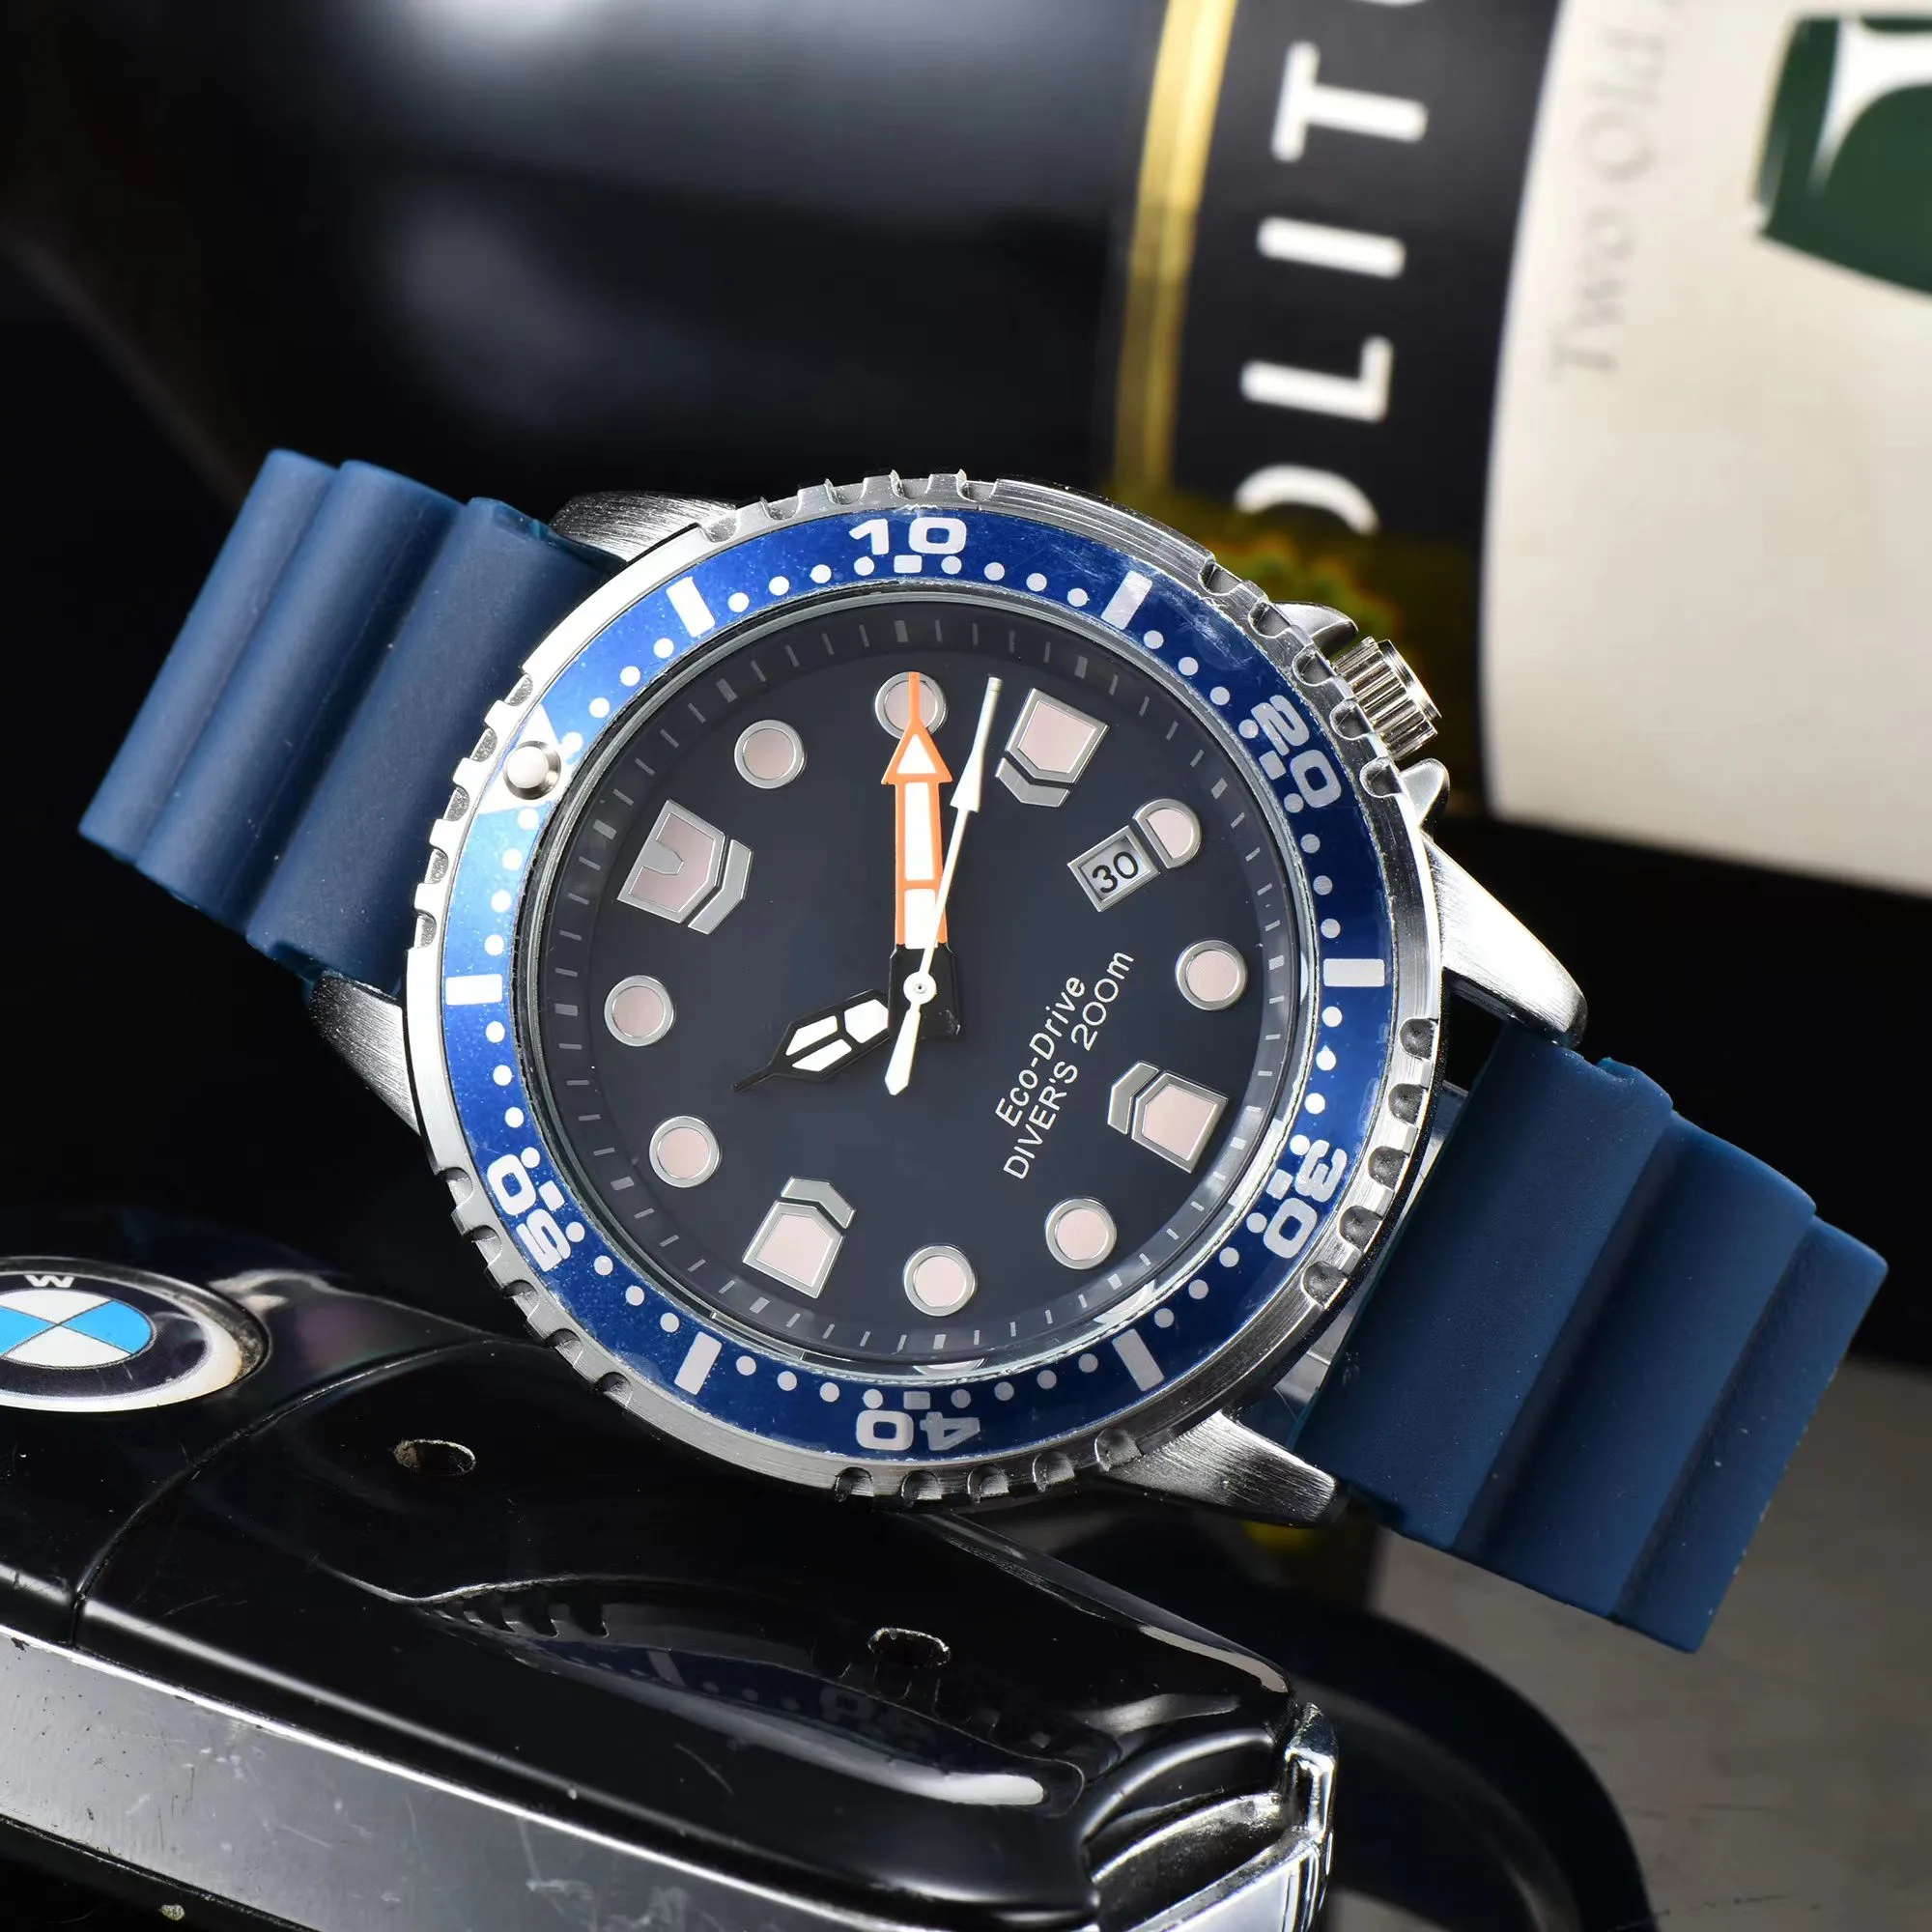 

2023 New Original Luxury Brand Sports Diving Watch Silicone Luminous Men's Watch BN0150 Eco-drive Series Blue Dial Quartz Watch